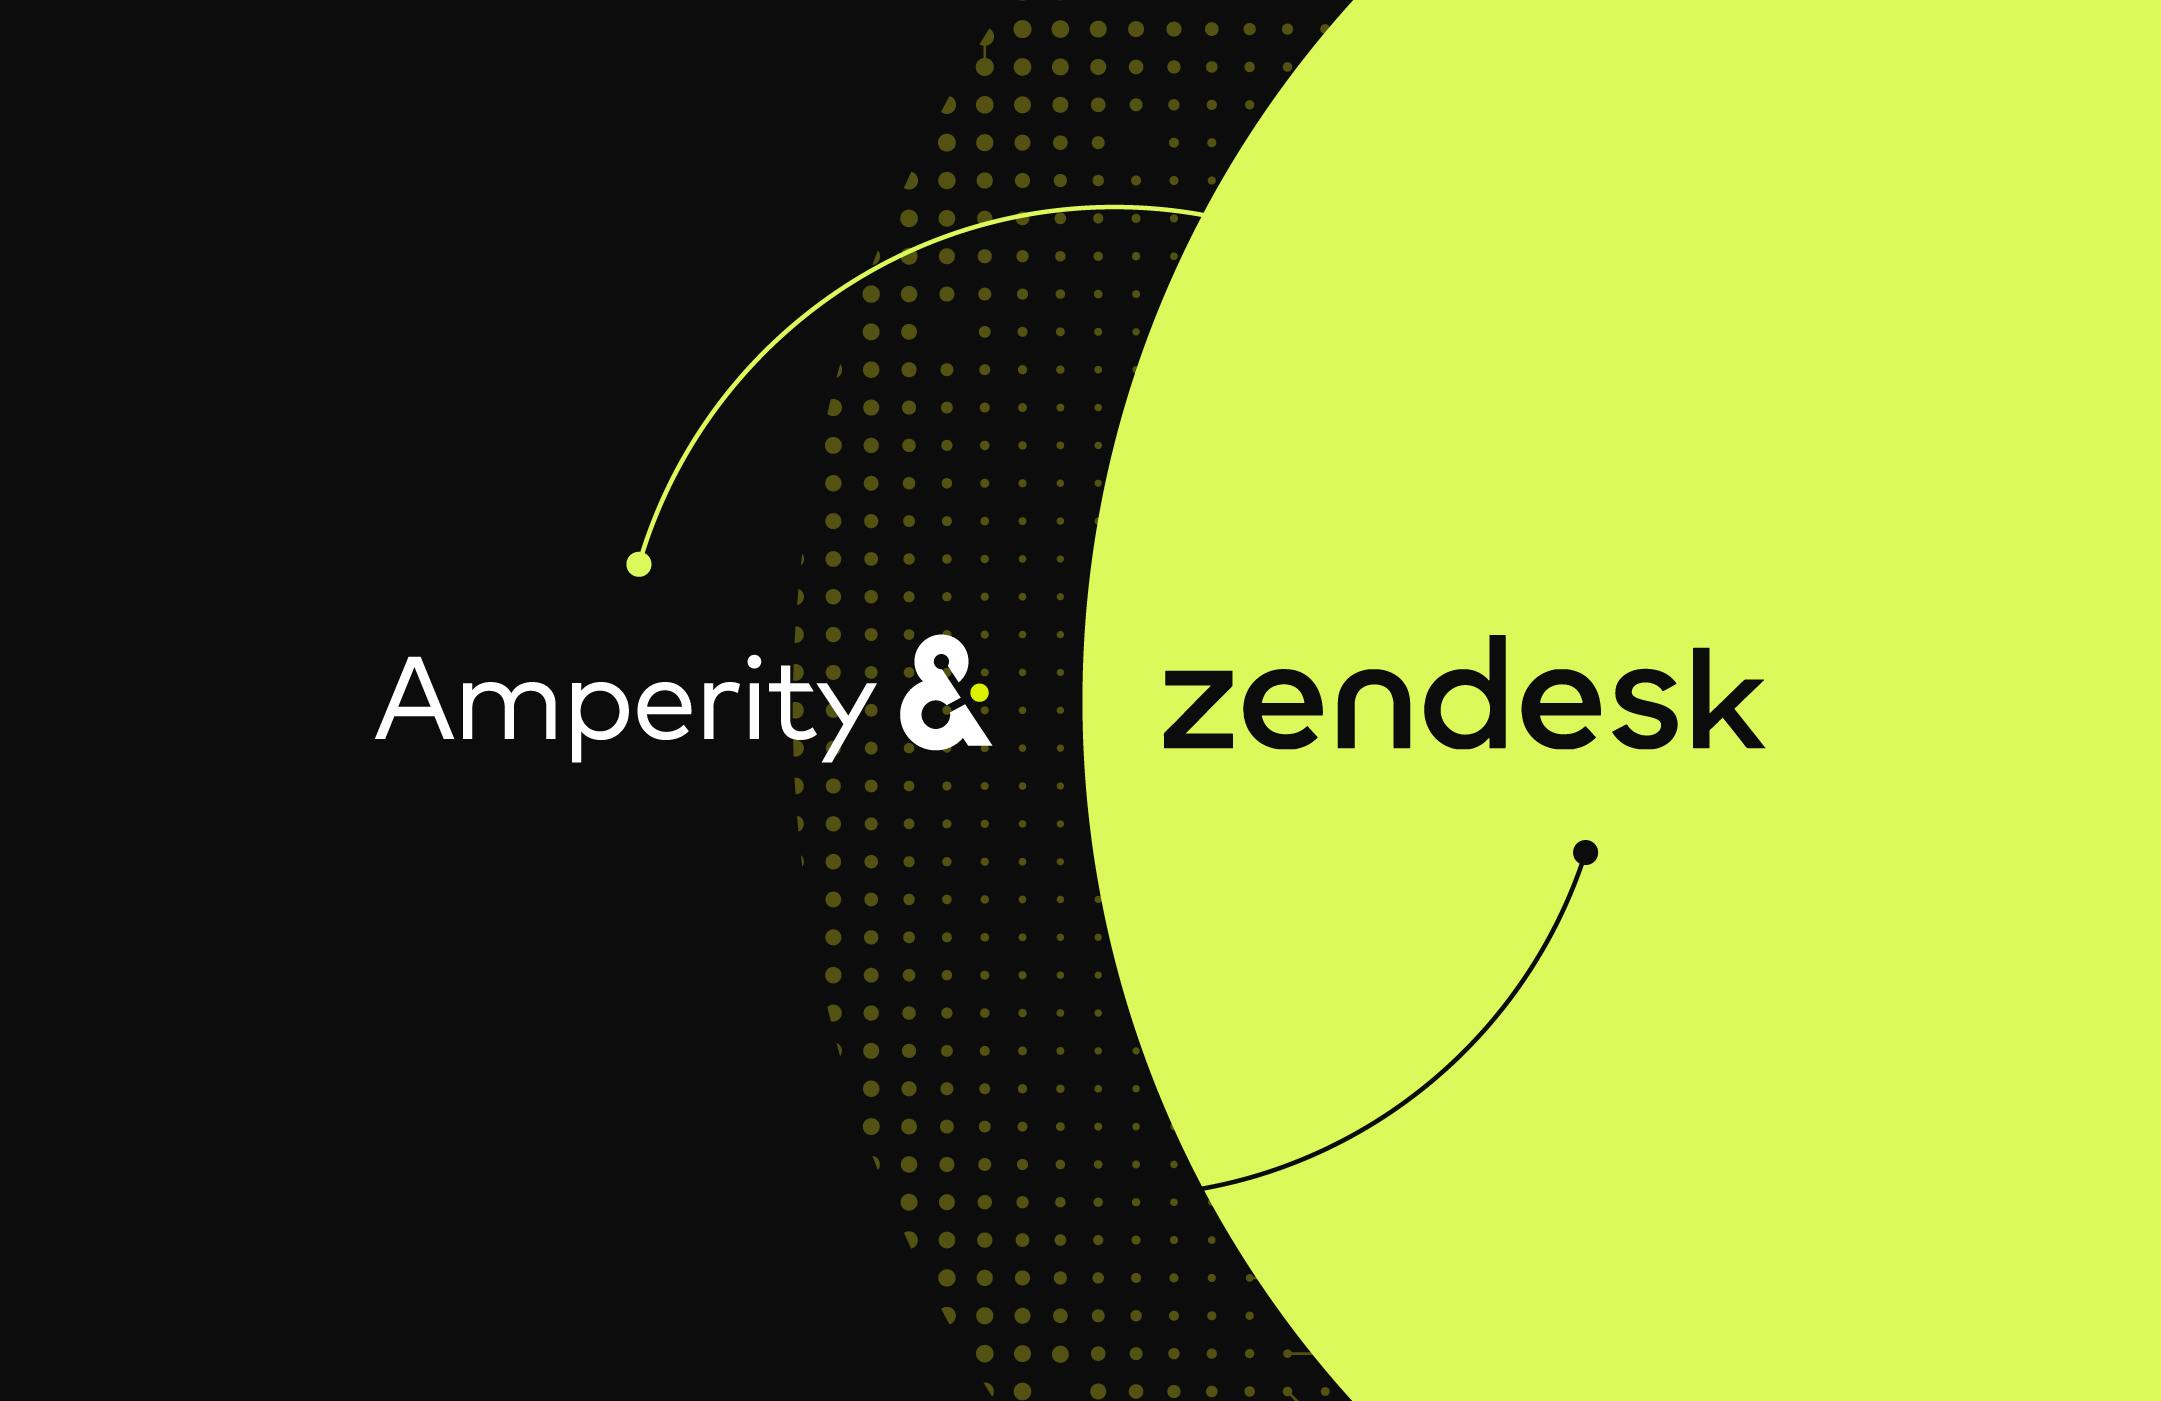 Image of Amperity & zendesk logos. 